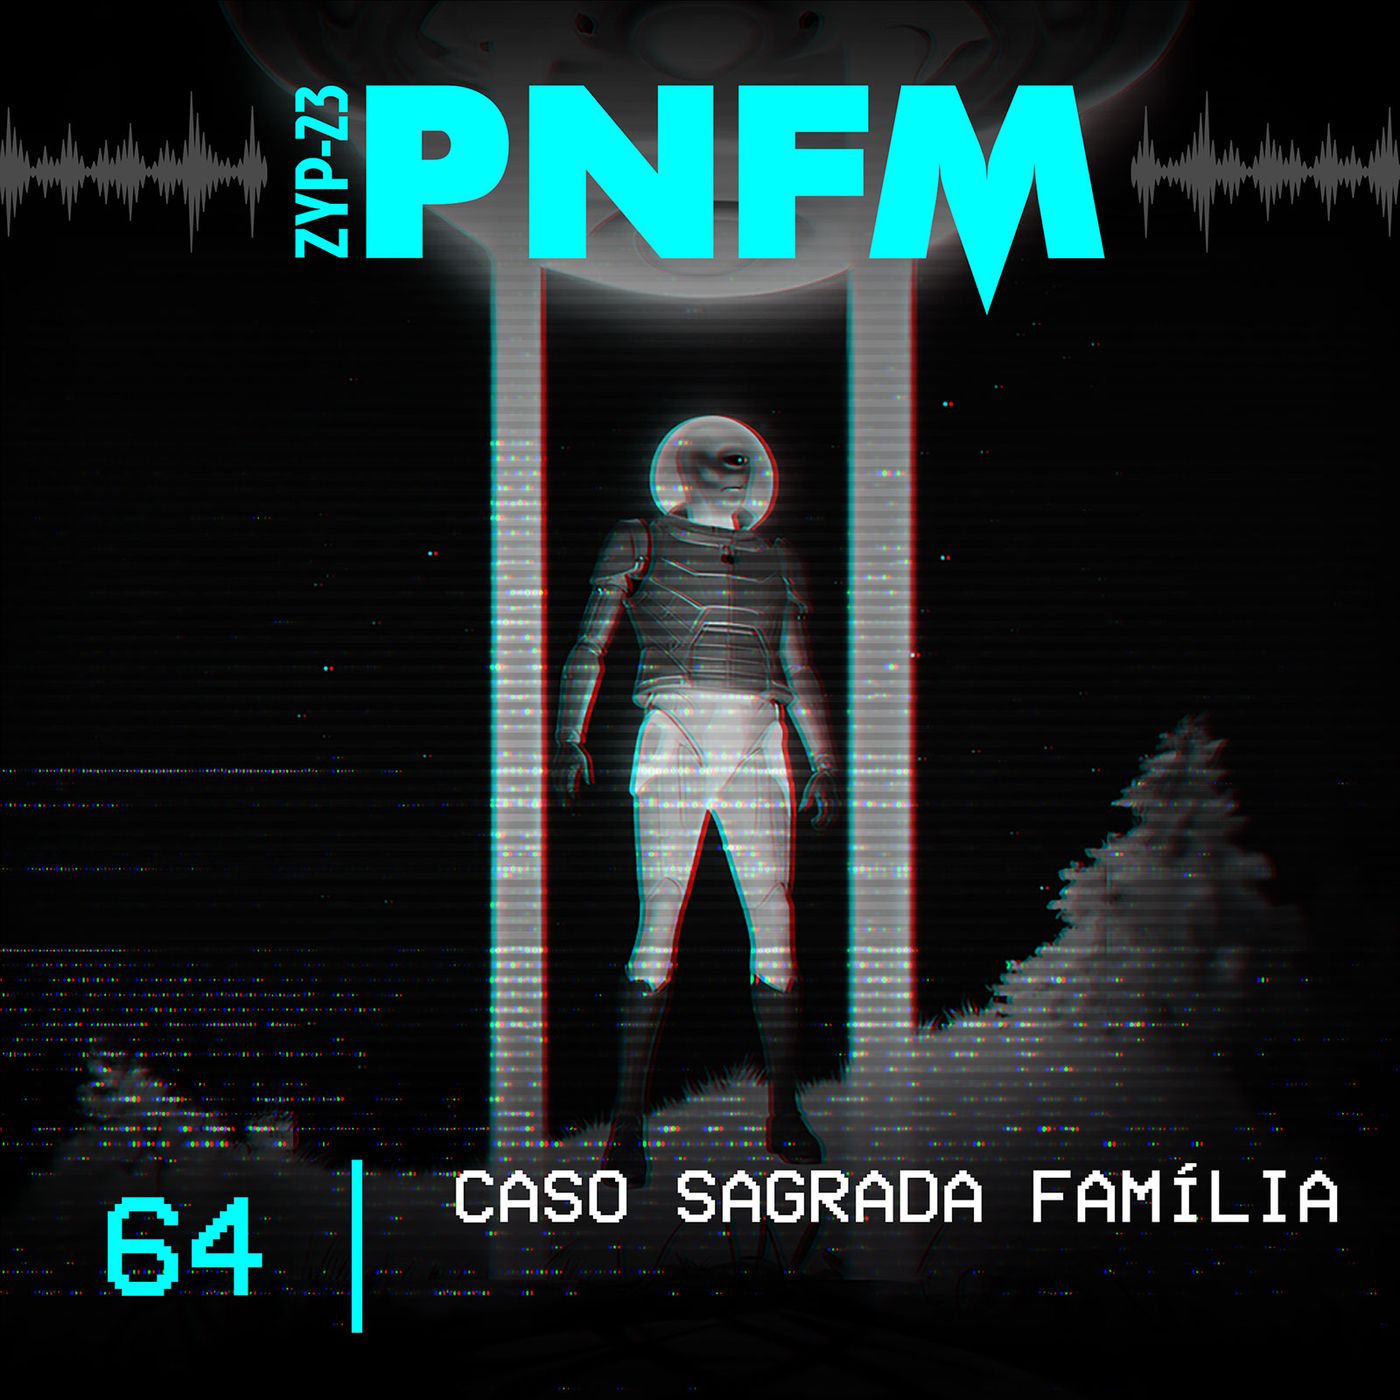 PNFM - EP064 - Caso Sagrada Família